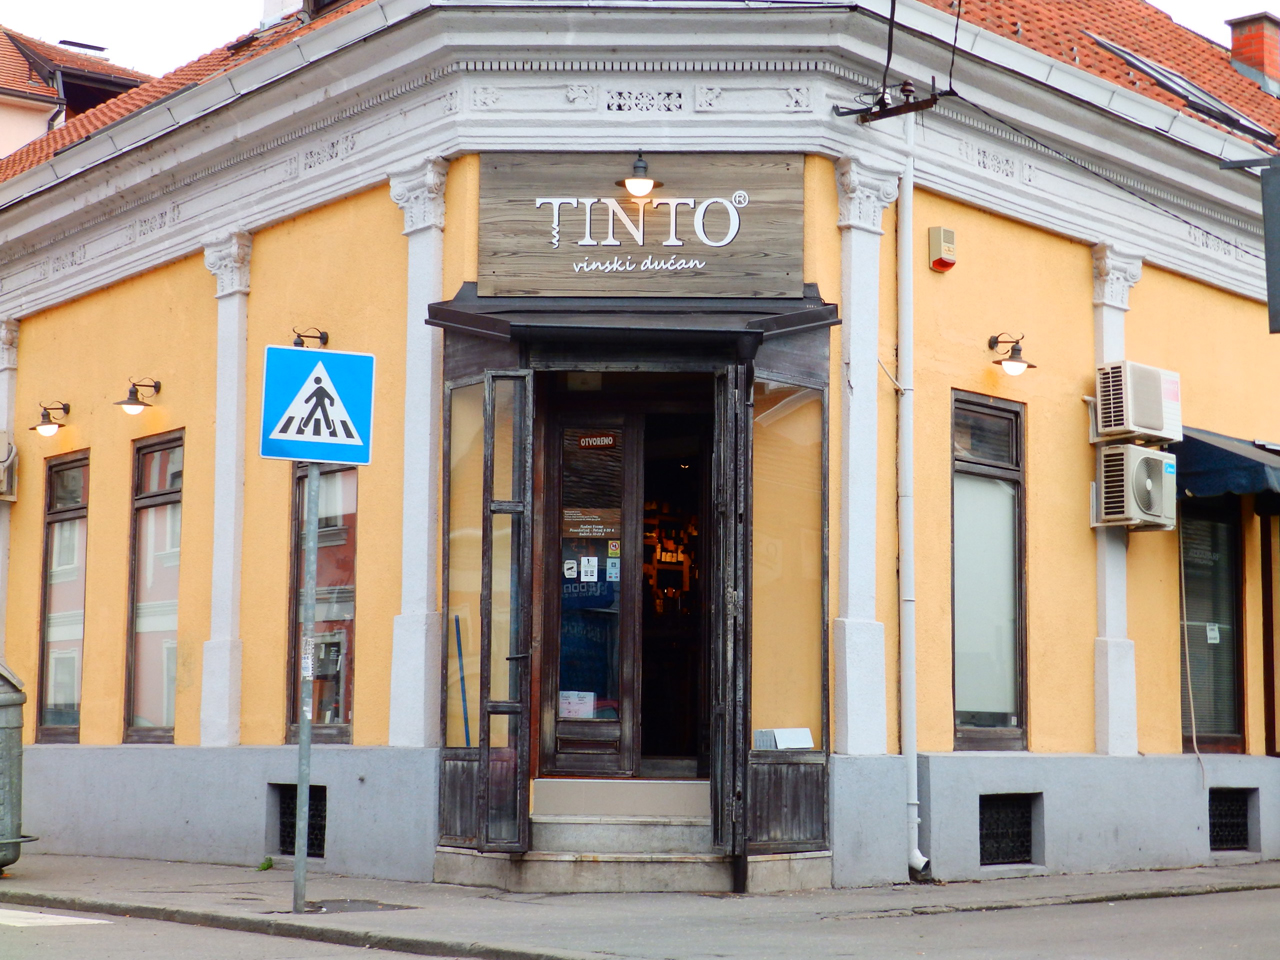 VINSKI DUCAN TINTOR - VINOMOND Vineries, wine shops Belgrade - Photo 1